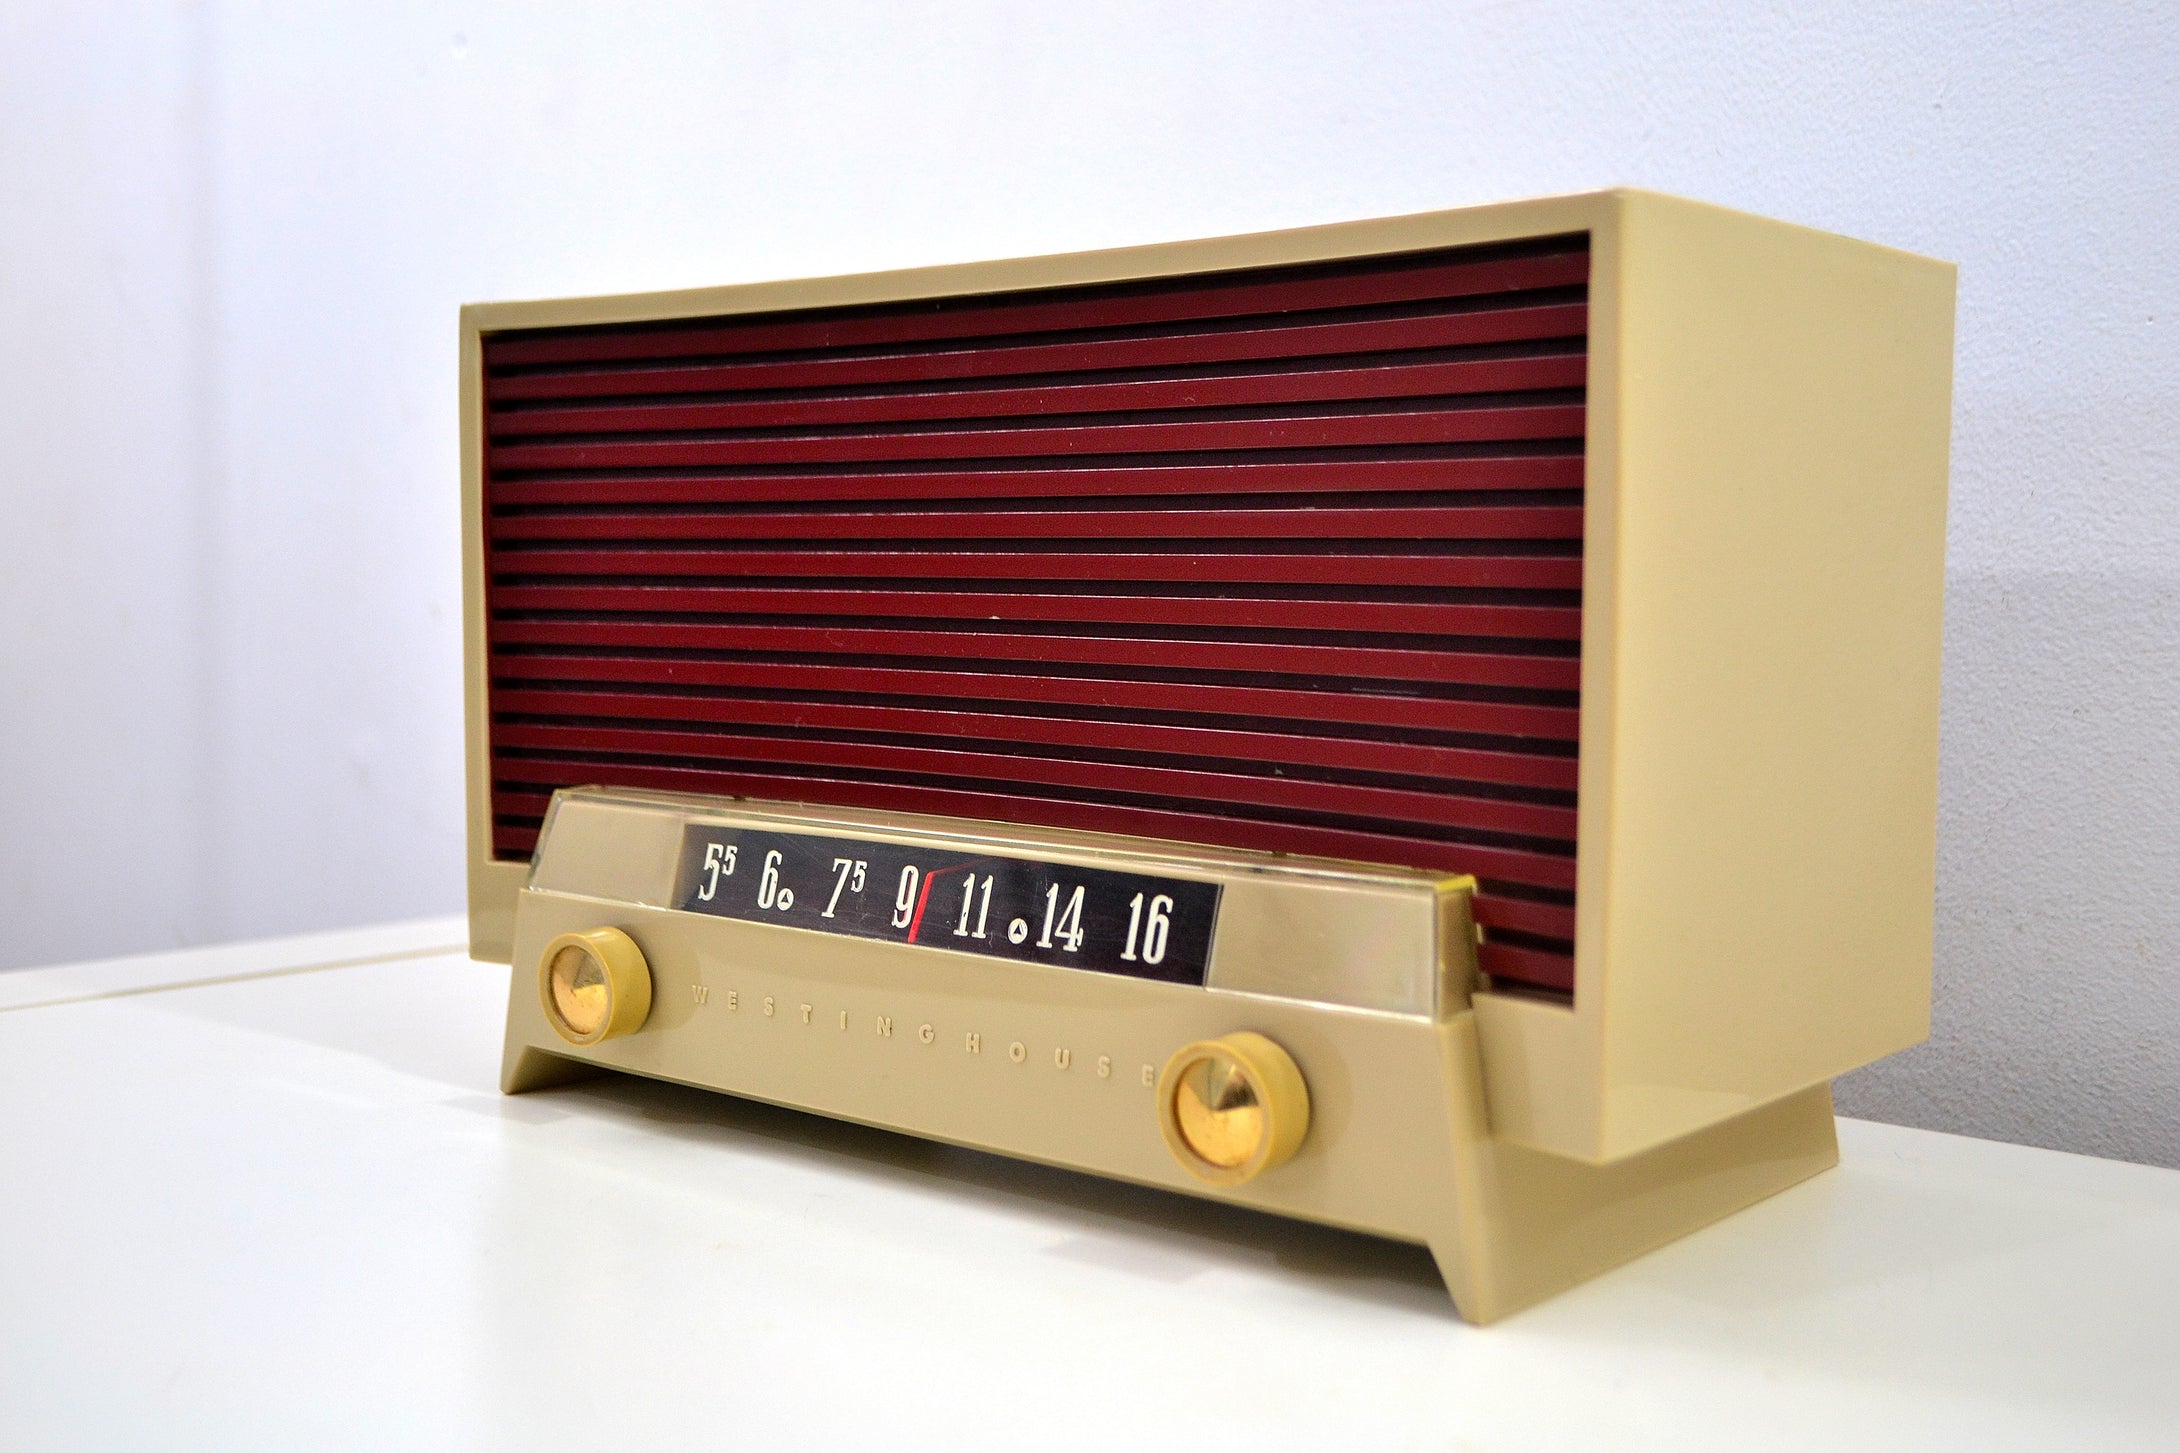 SOLD! - Jan. 19, 2020 - Beige and Brick Vintage 1955 Westinghouse Model H-536T6 AM Tube Radio Works Great! - [product_type} - Westinghouse - Retro Radio Farm